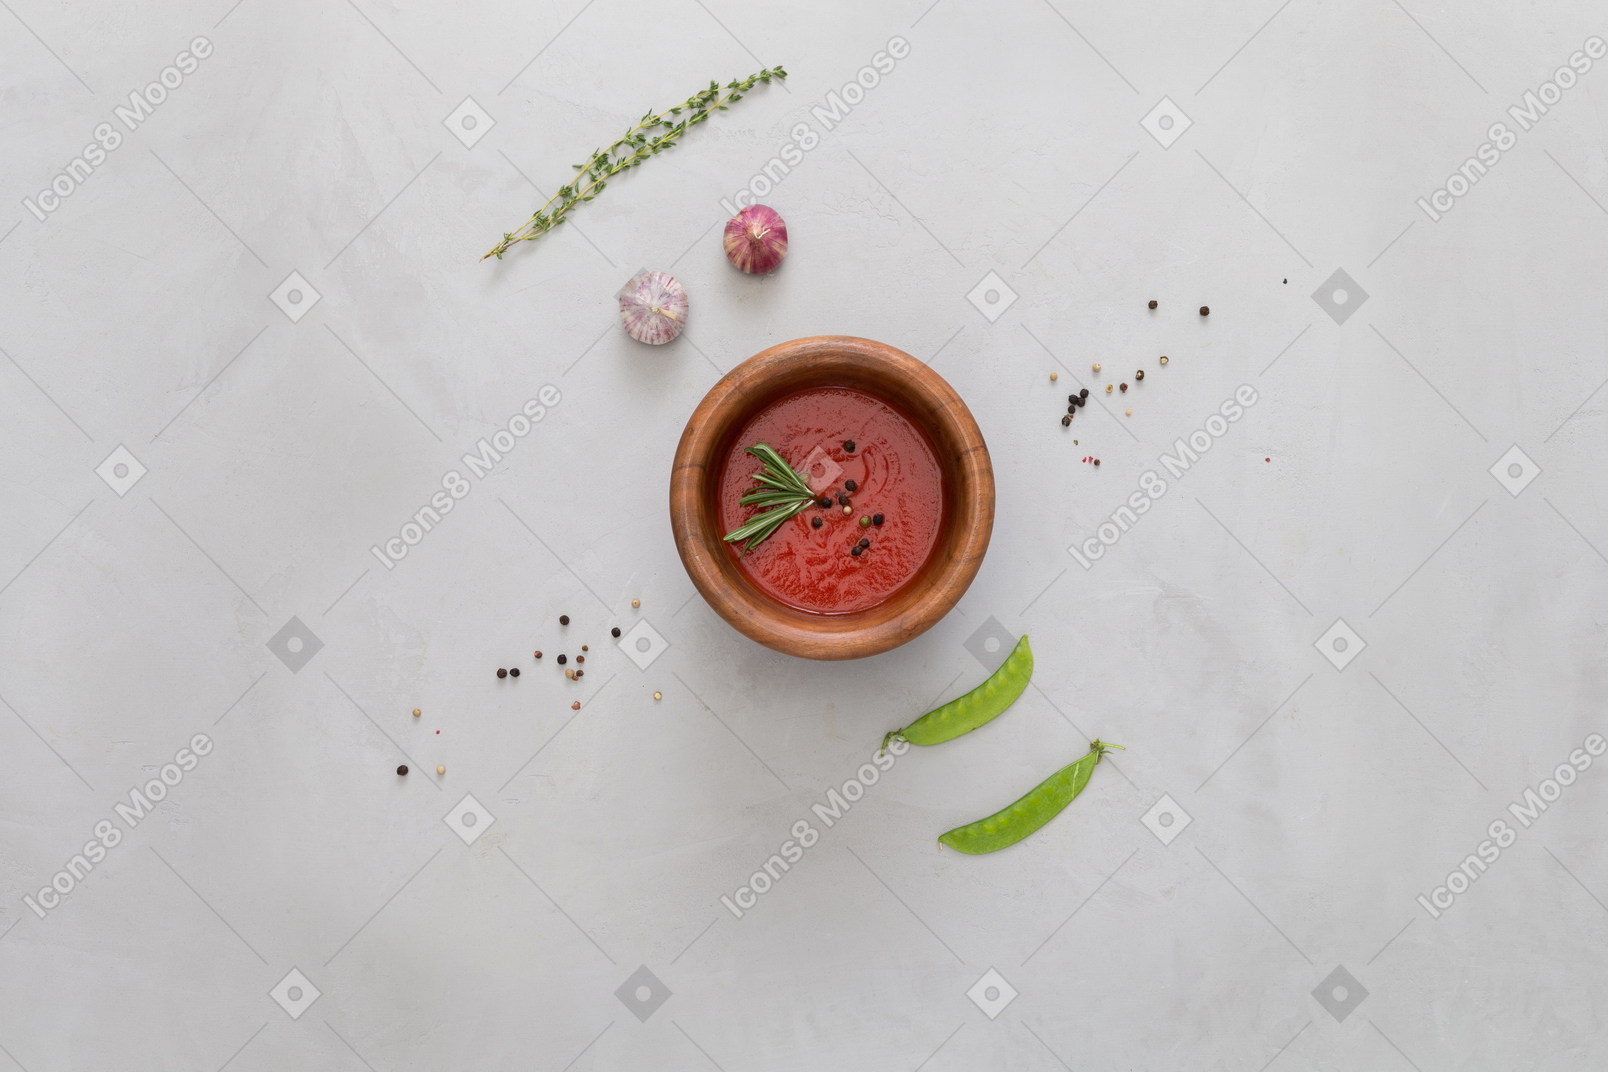 A bowl of gazpacho, some garlic, green peas